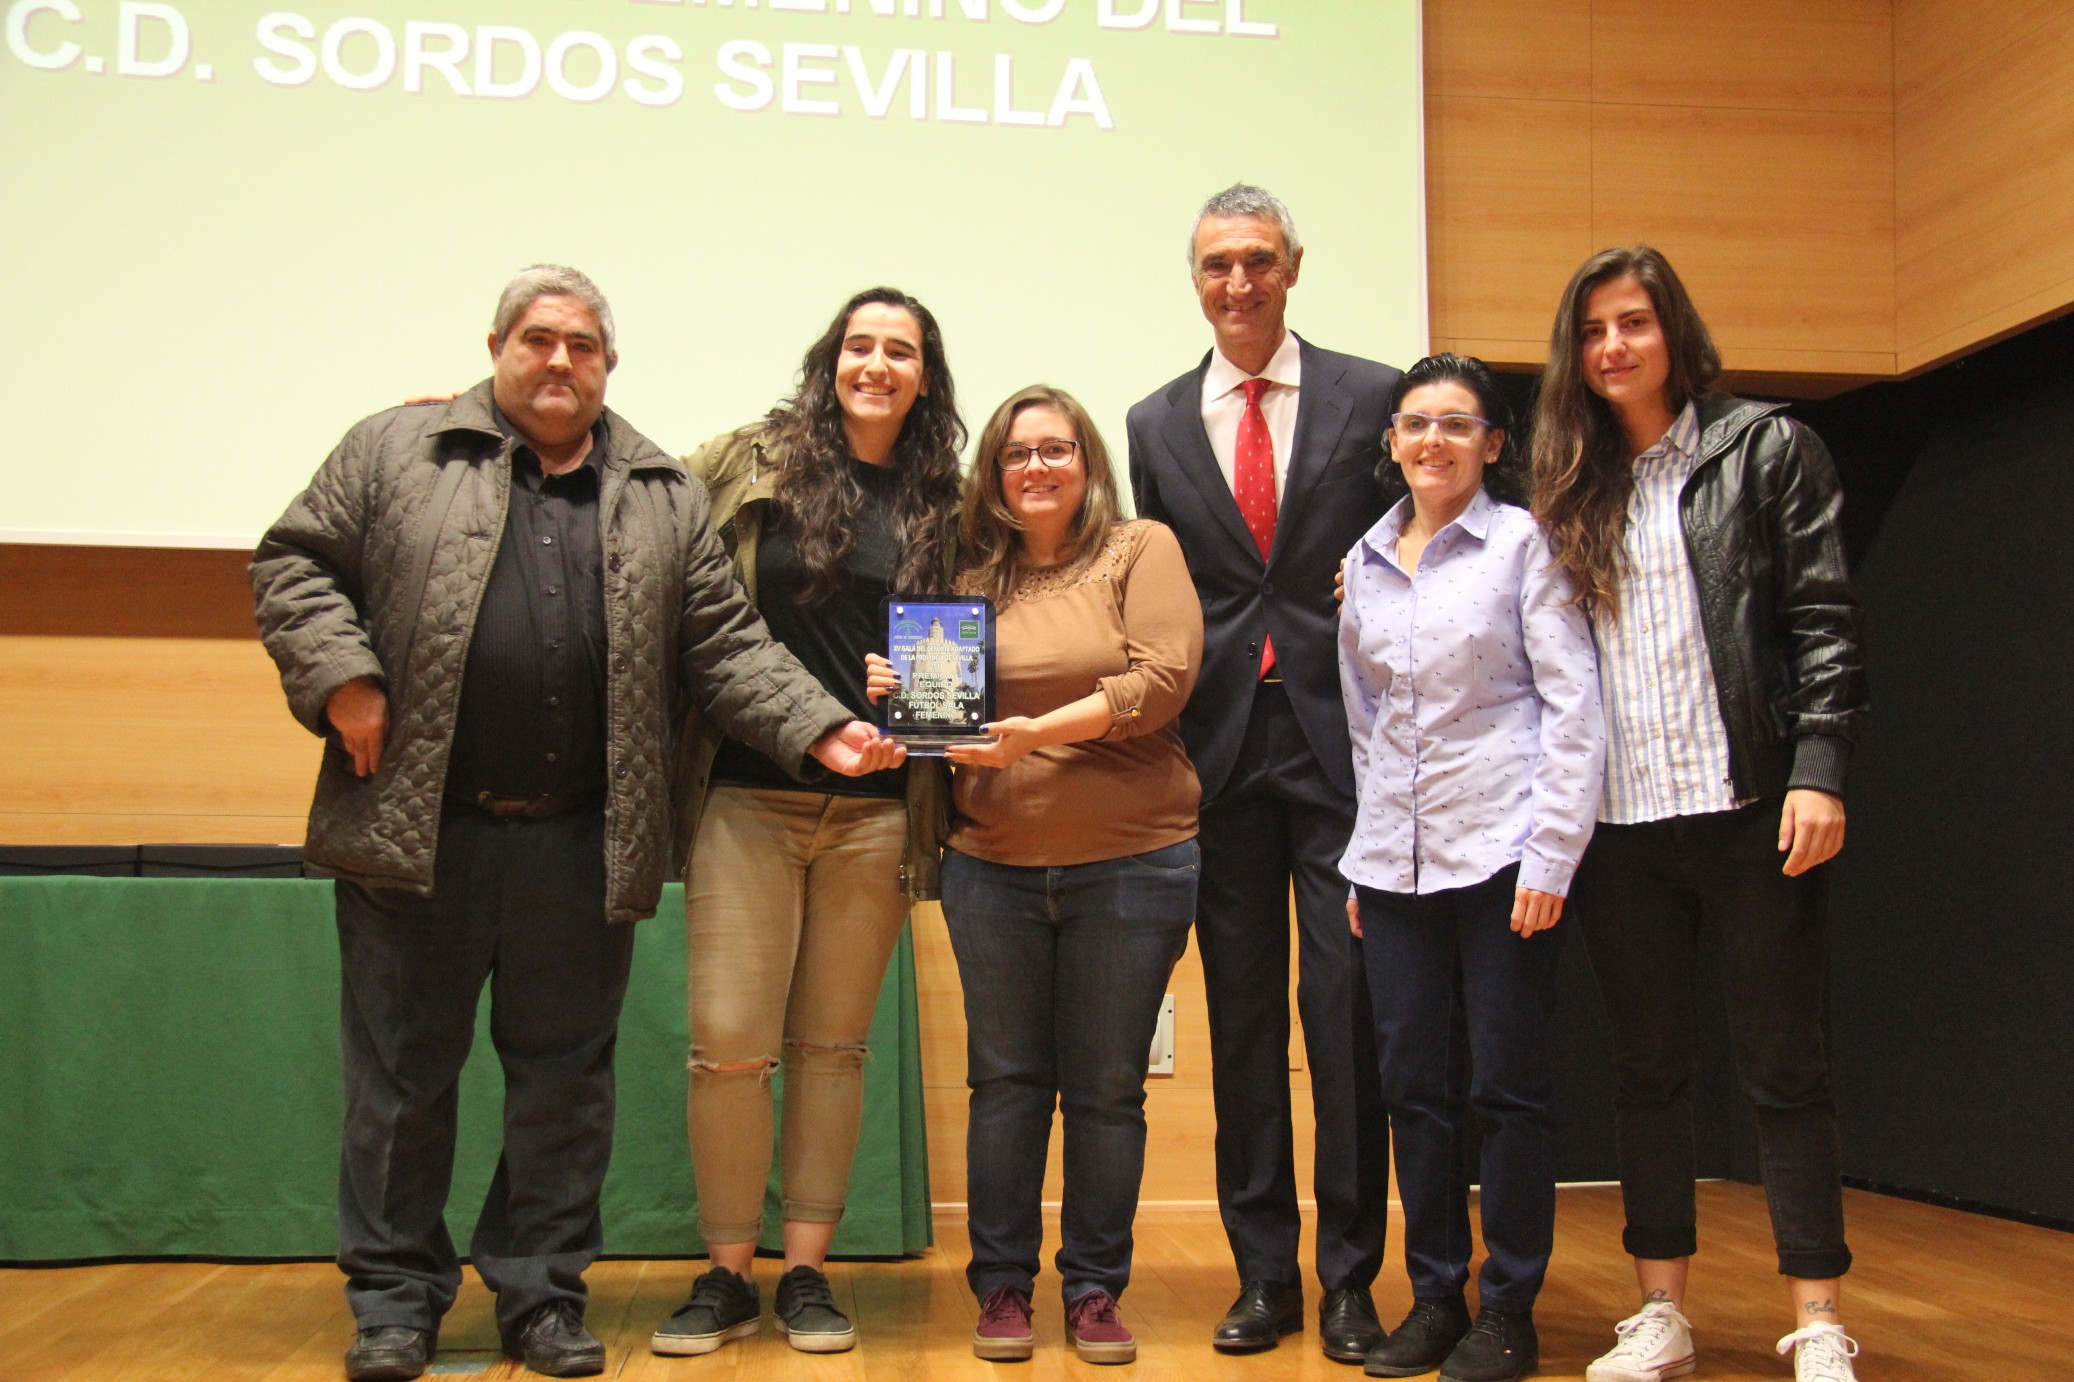 Seville's parasports awards